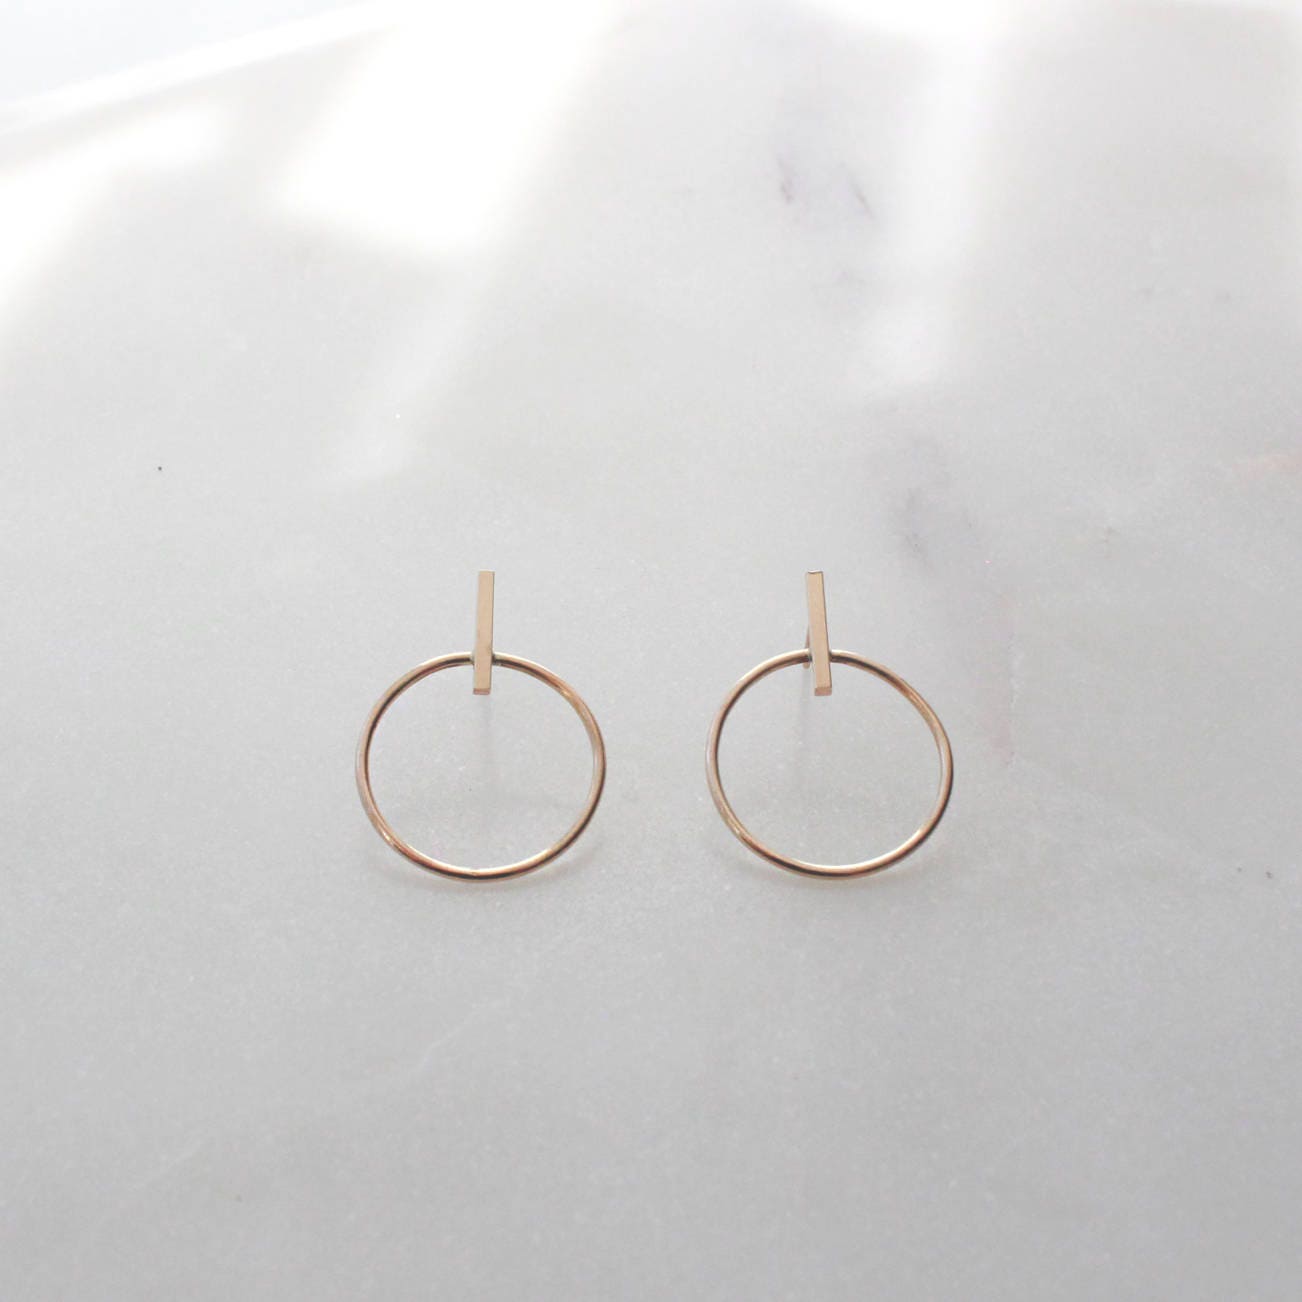 Gold Bar Circle Earrings - 14K Gold Filled, 10mm Bar, 18mm Circle